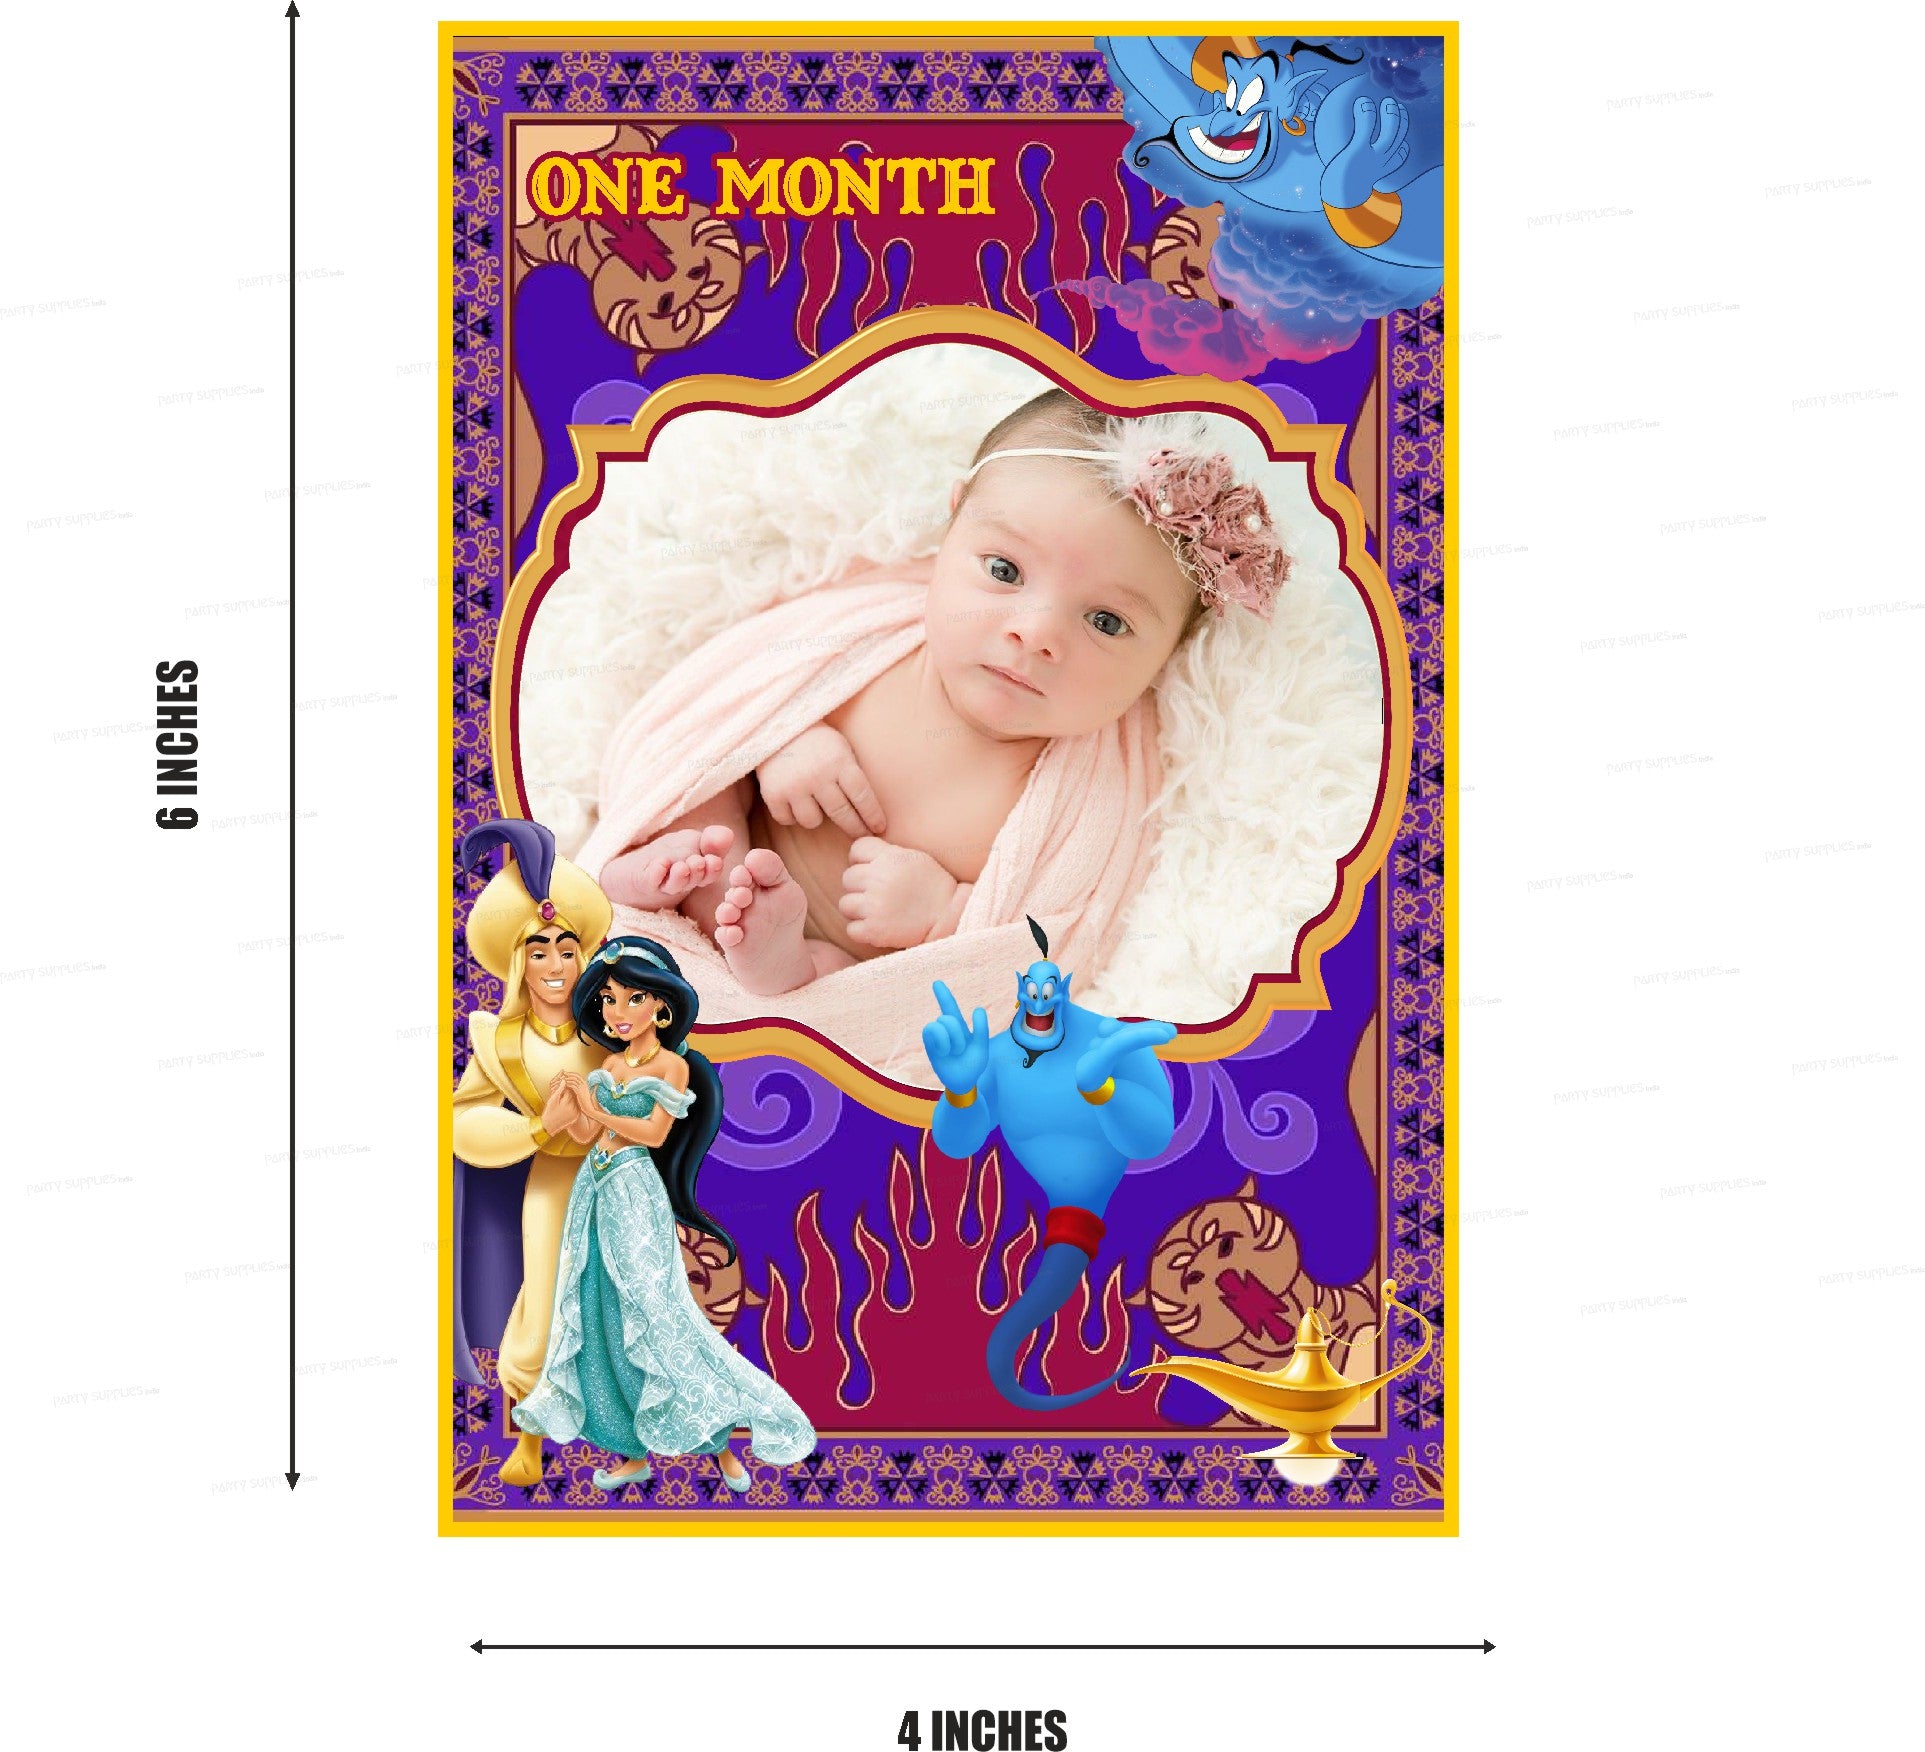 PSI Aladdin Theme 12 Months Photo Banner